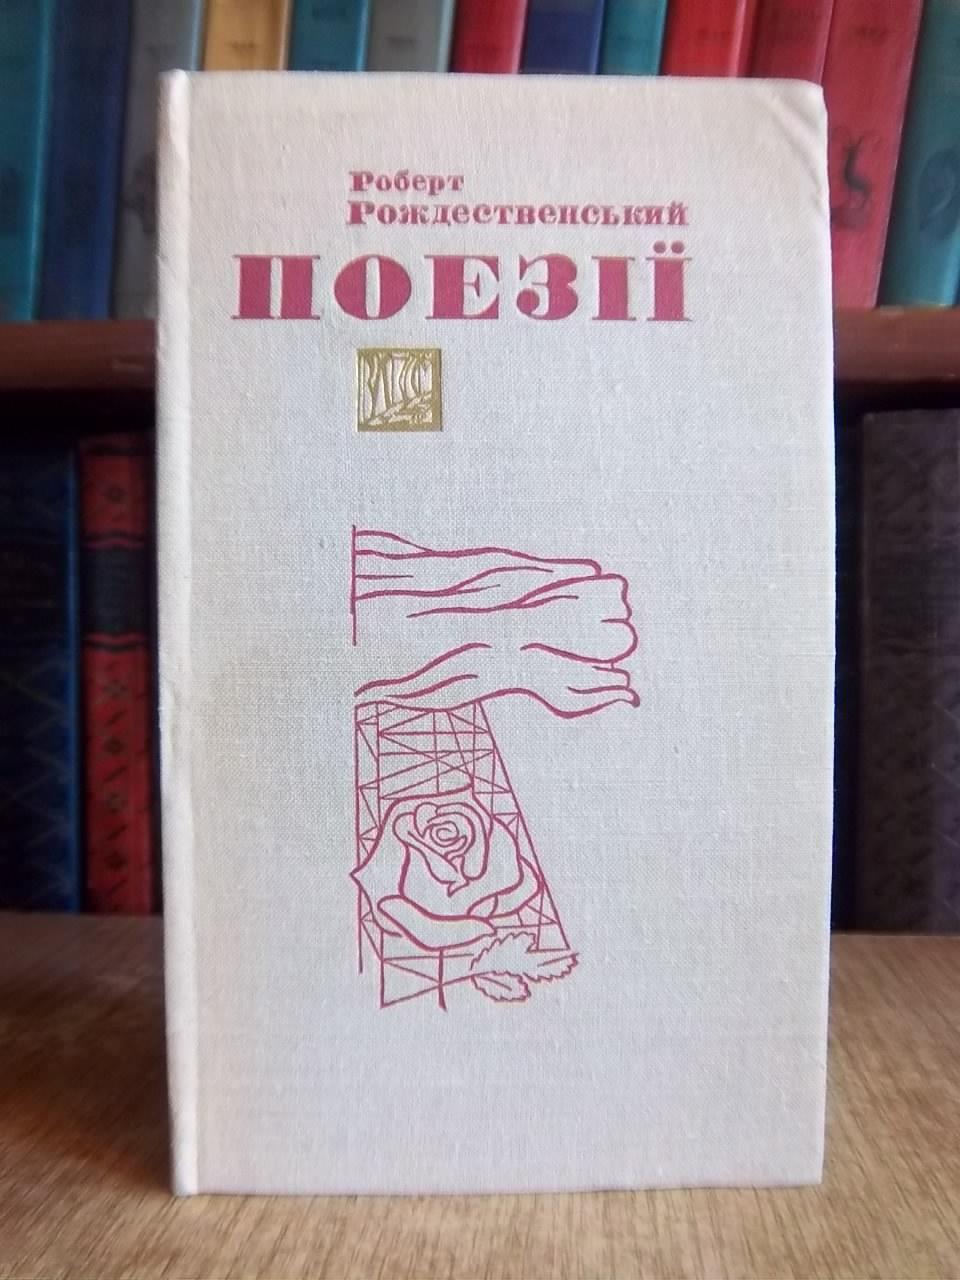 Роберт Рождественський.	Поезії.